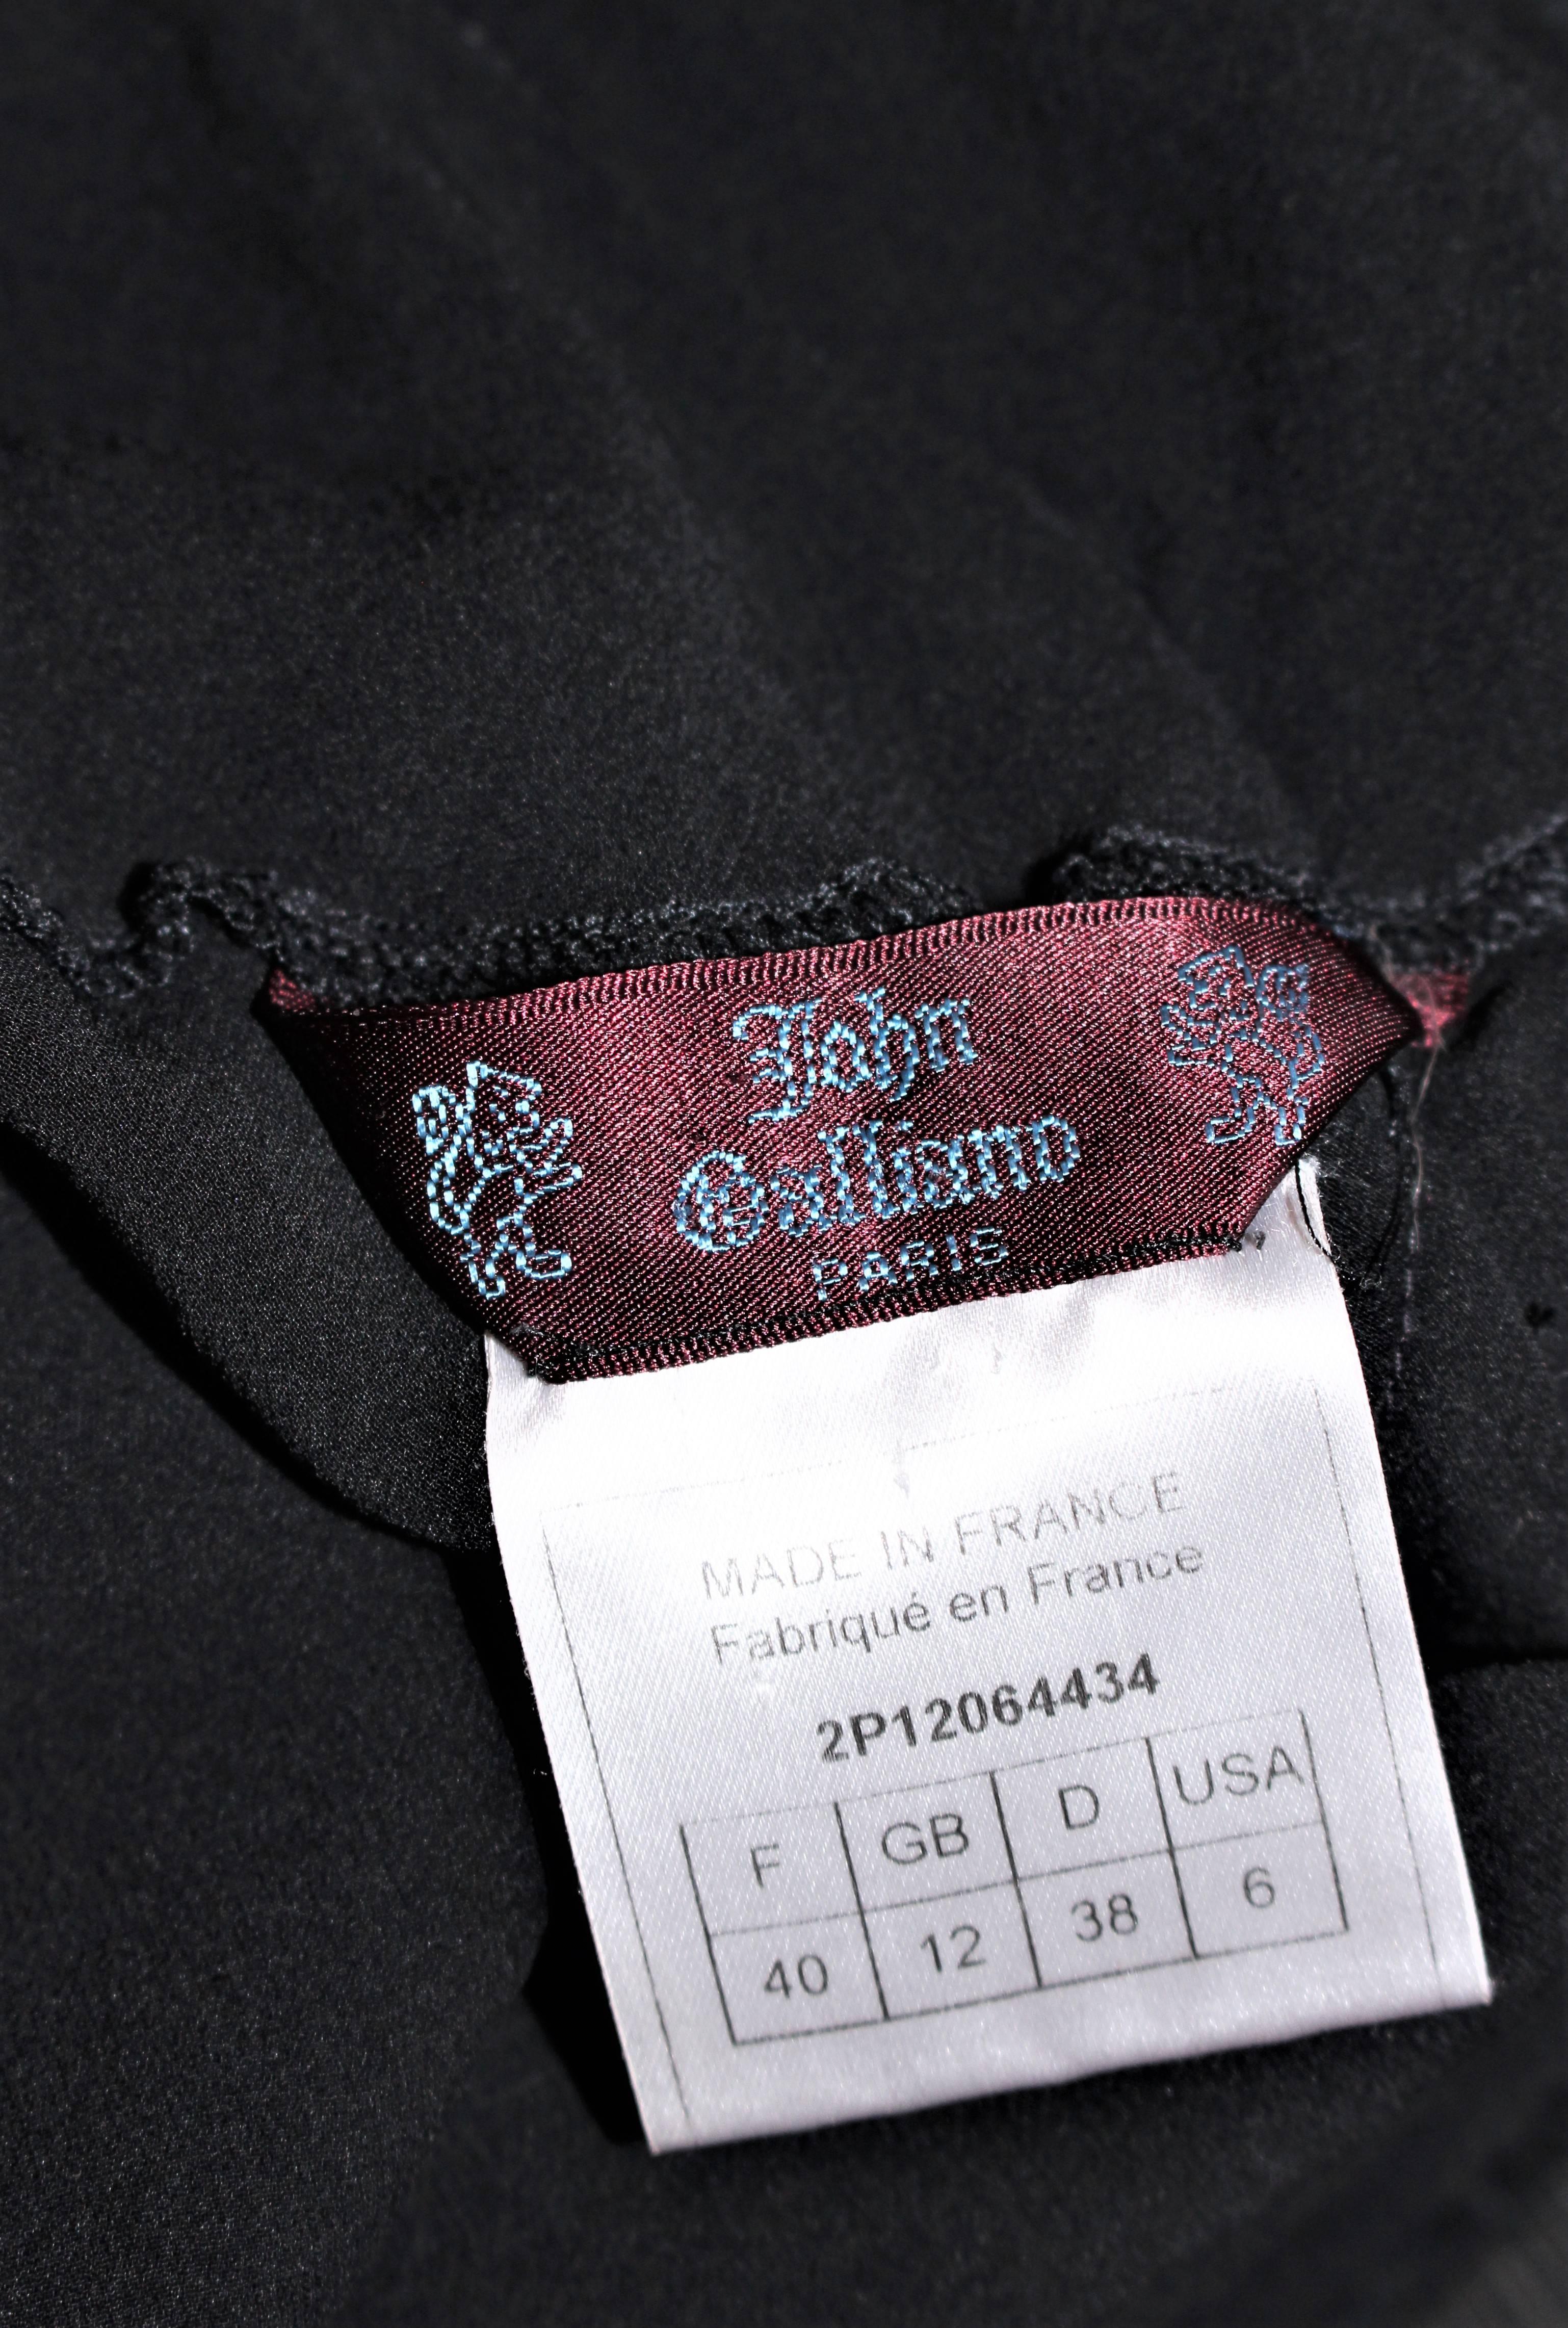 JOHN GALLIANO Black Silk Eyelet Lace Bias Gown Size 6 40 6